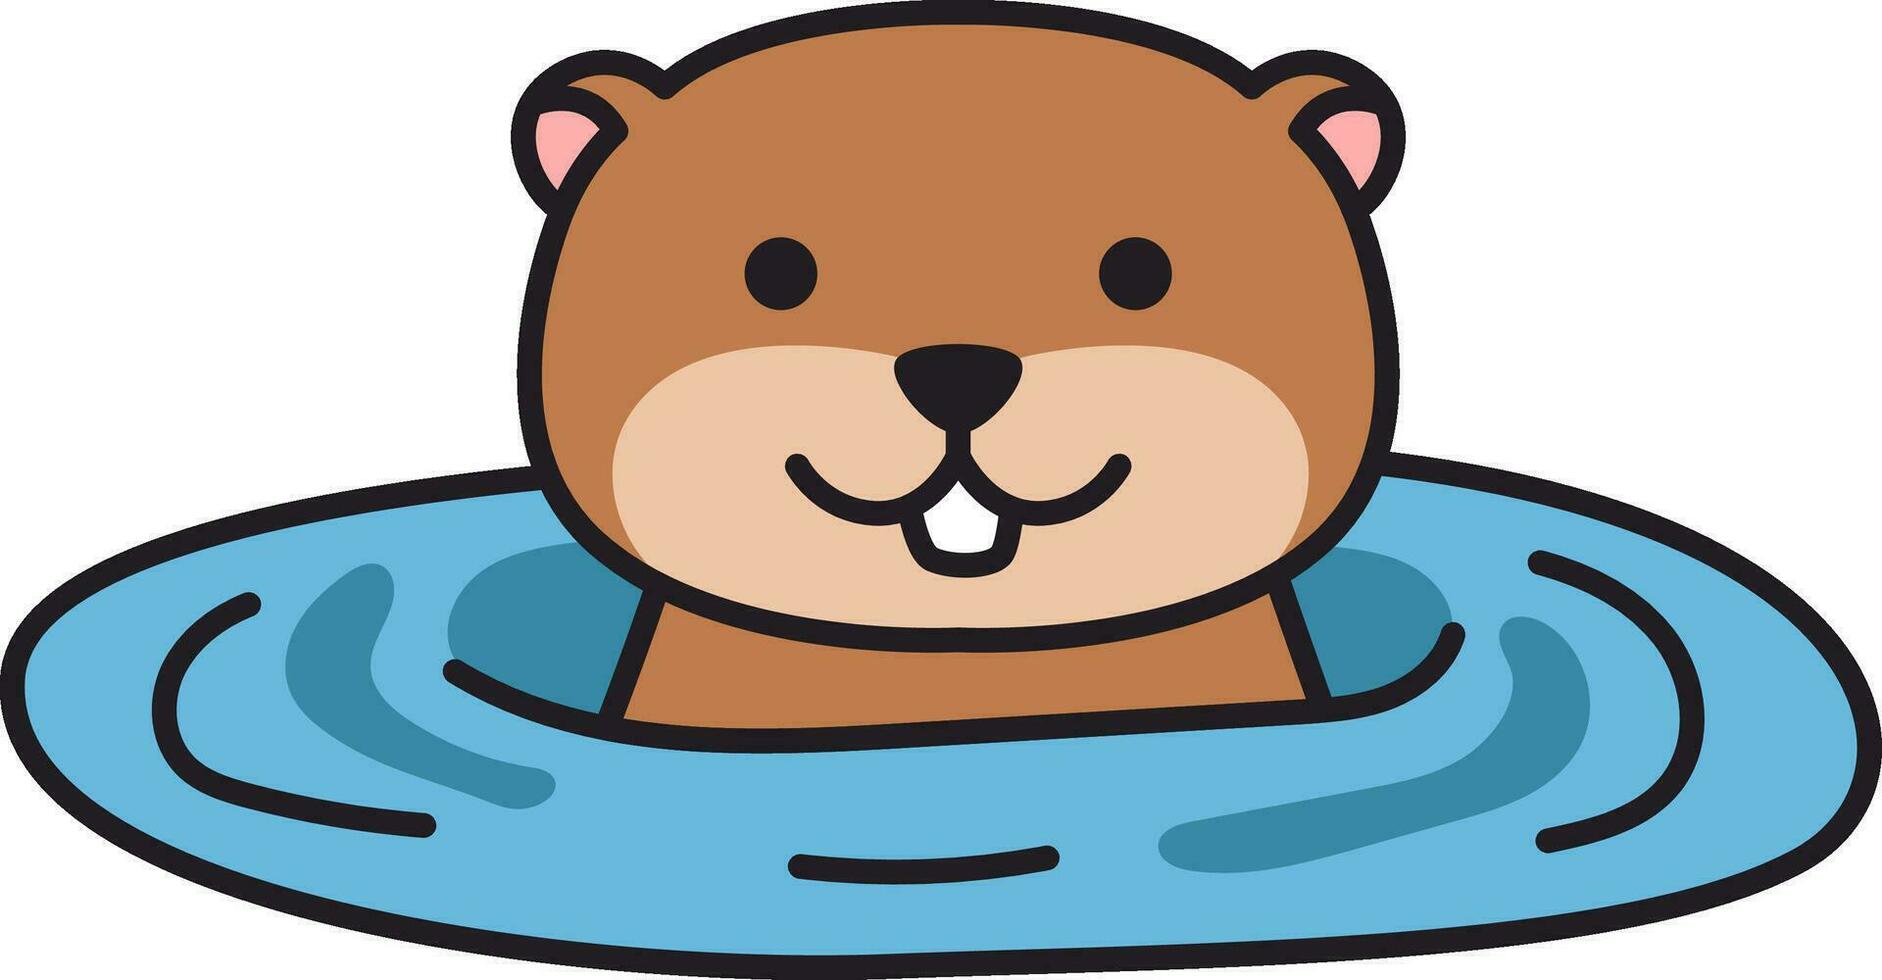 Cute beaver swimming in the pool. Cartoon vector illustration.